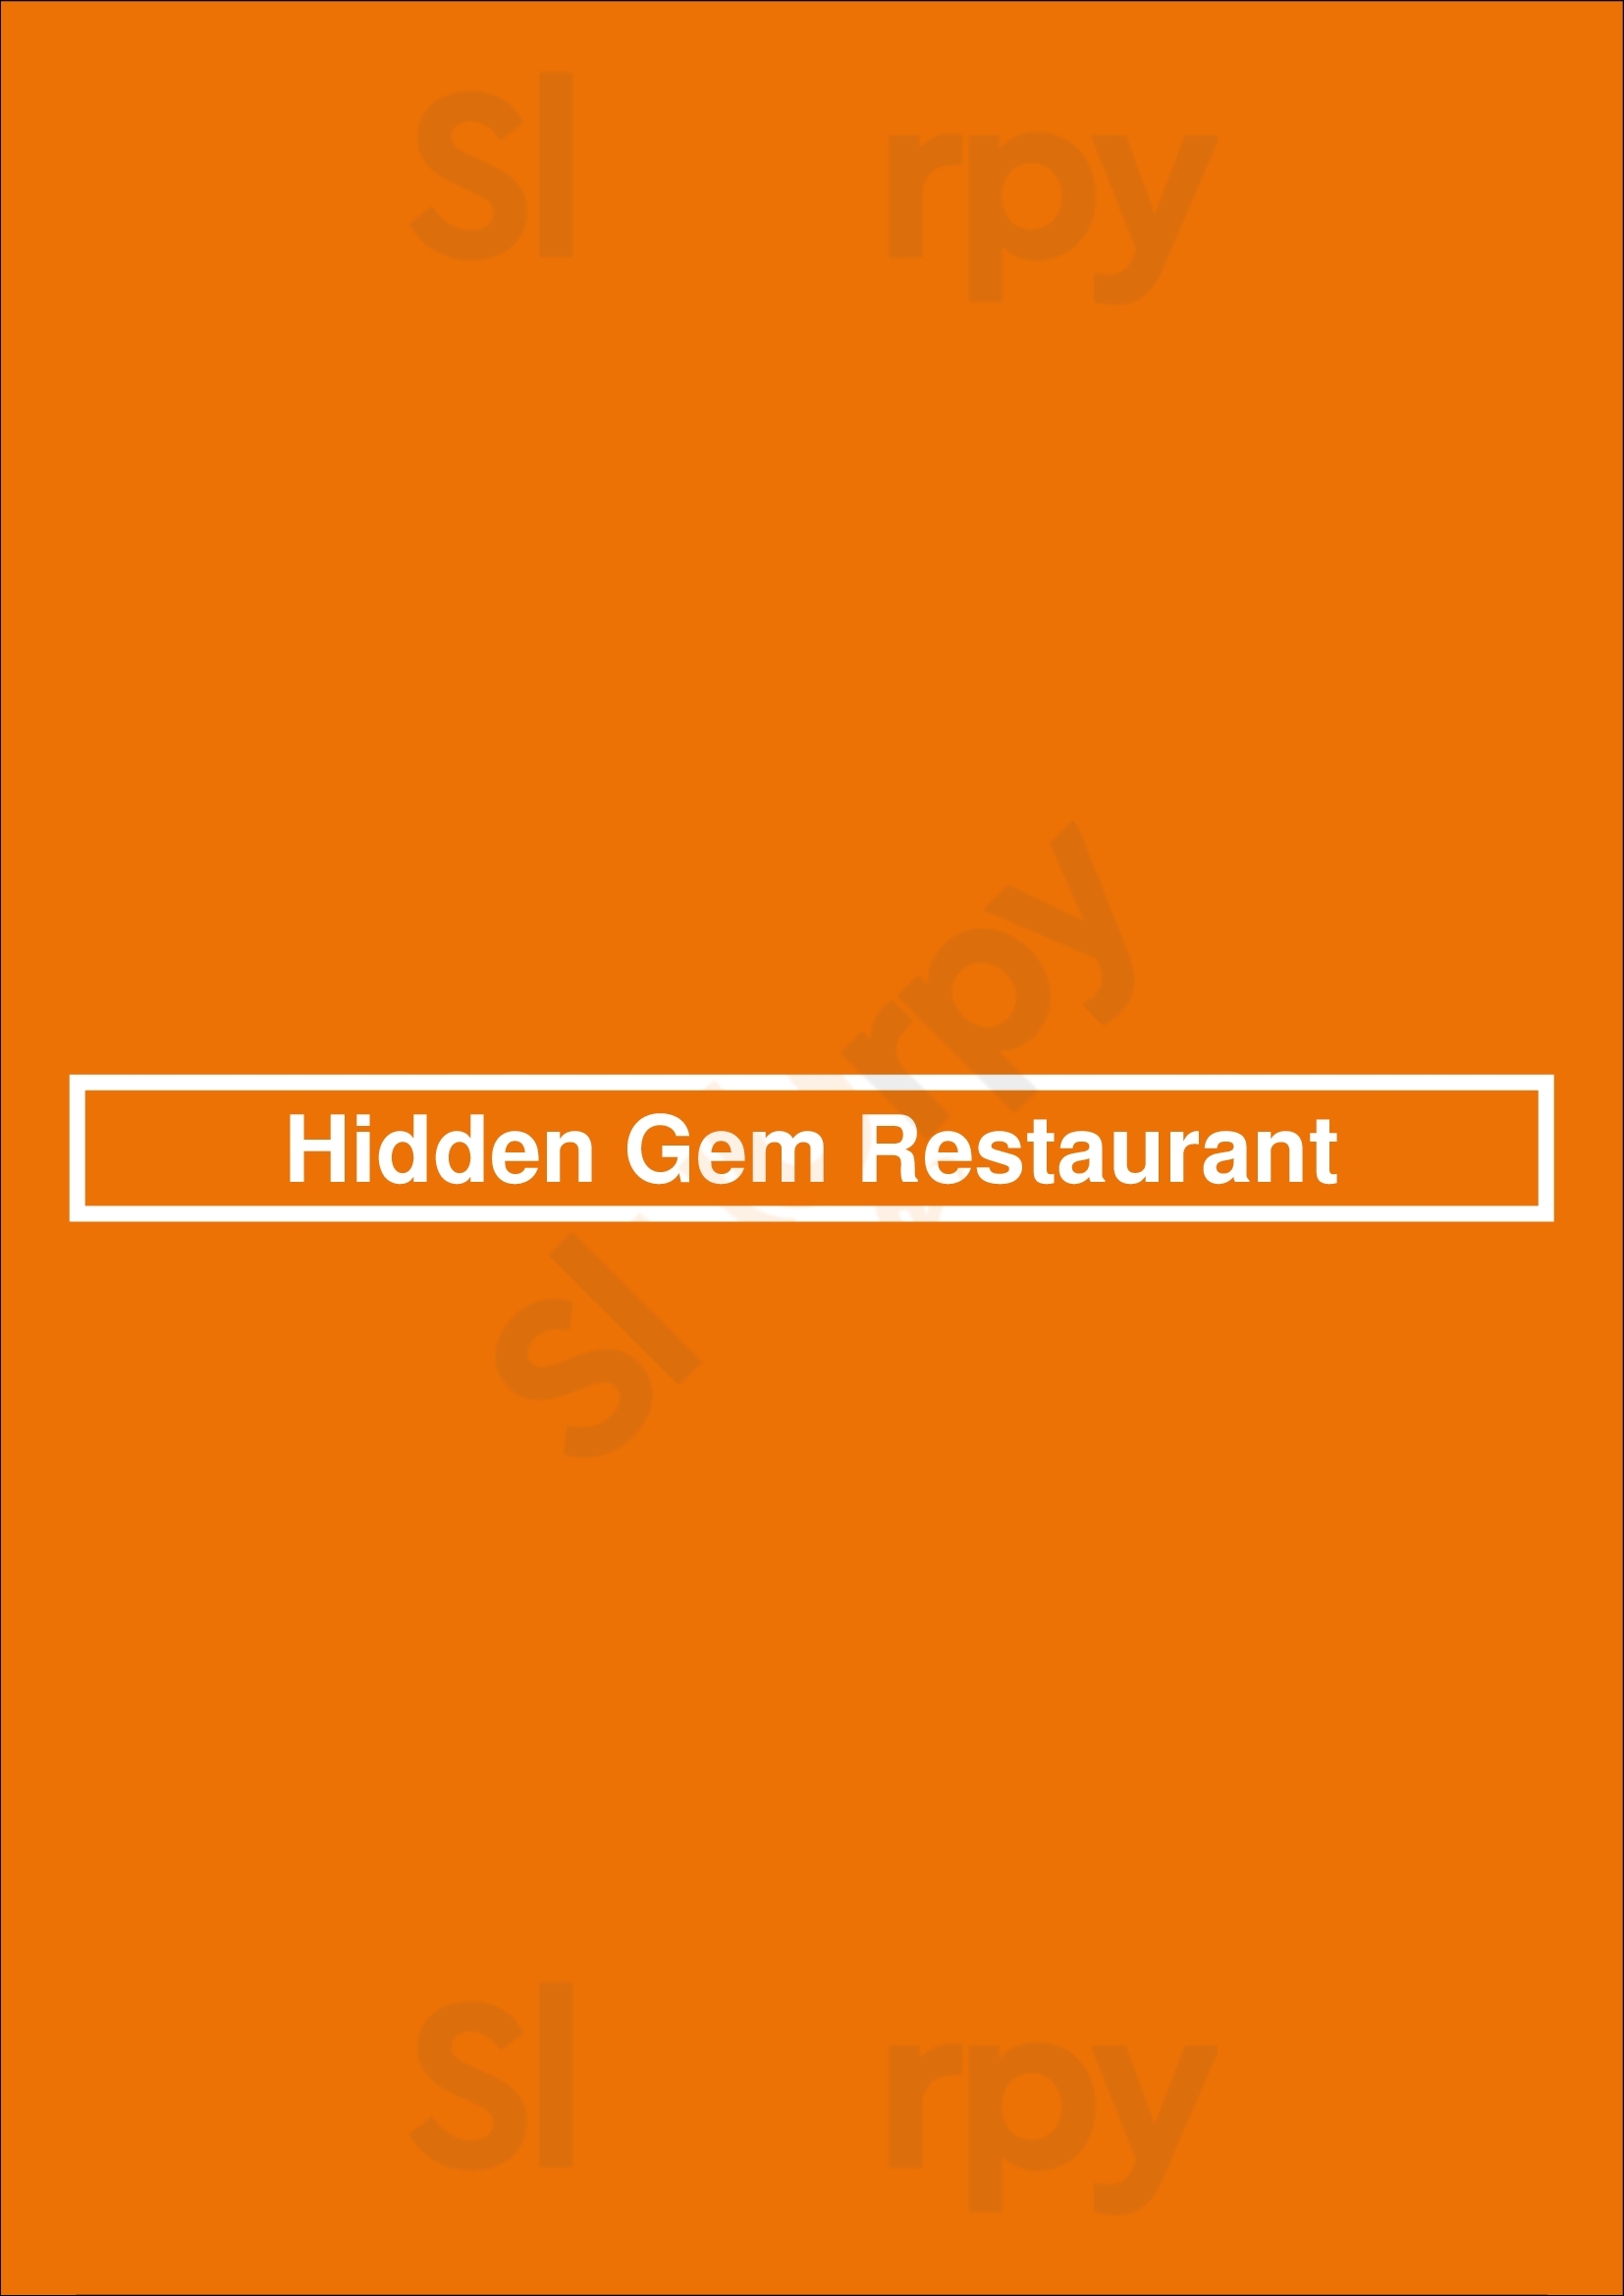 Hidden Gem Restaurant Kelowna Menu - 1